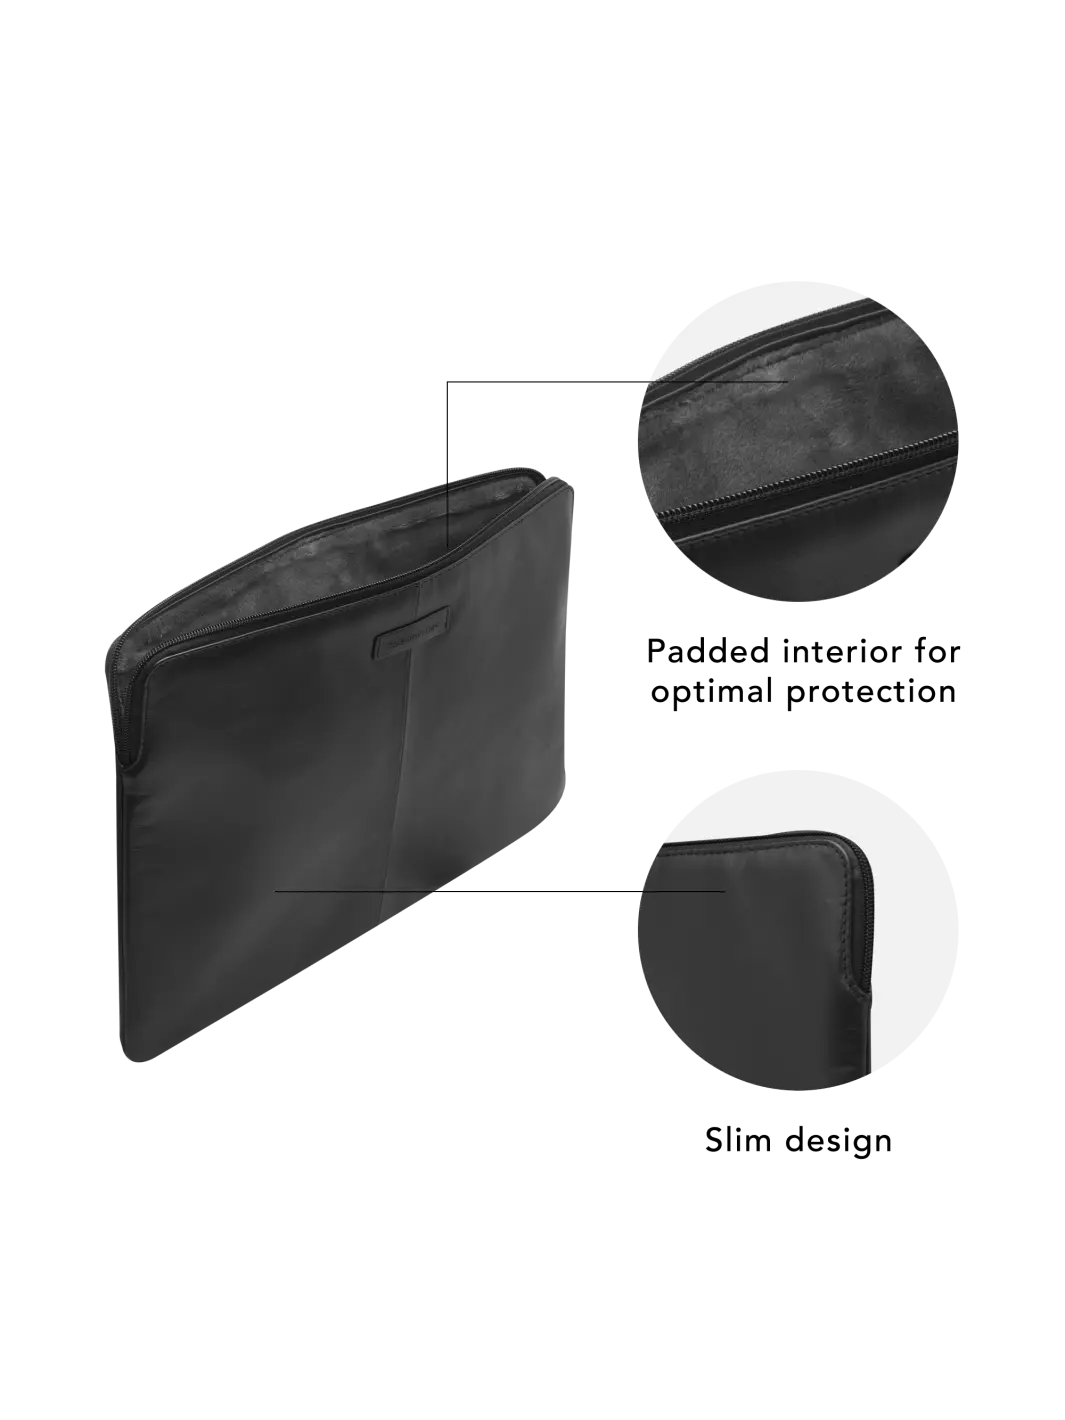 Skagen Pro Black MacBook Pro 16" (2021-2023) Laptop sleeves